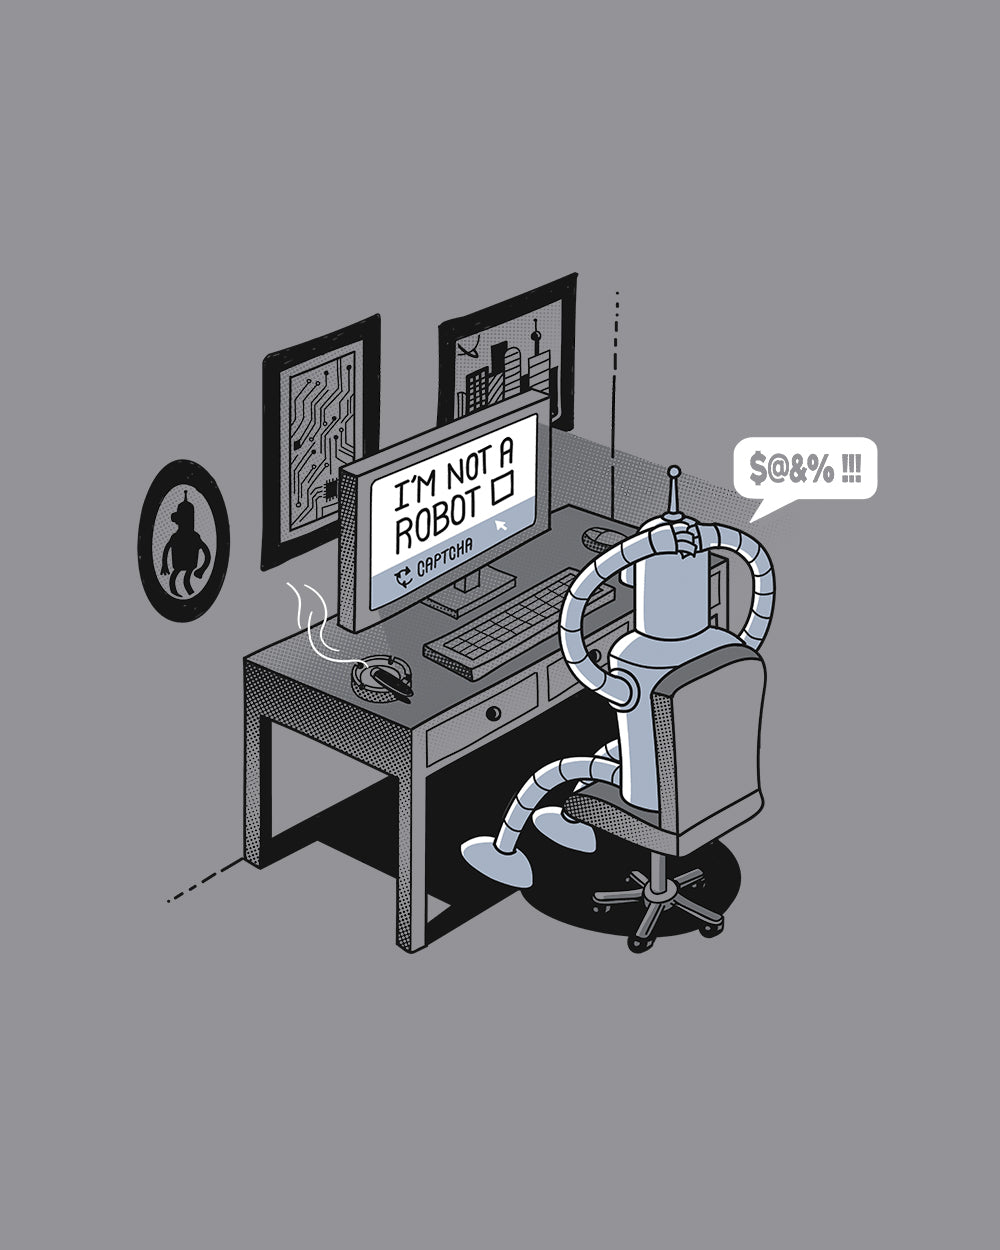 Robot Problems Sweater Australia Online #colour_grey